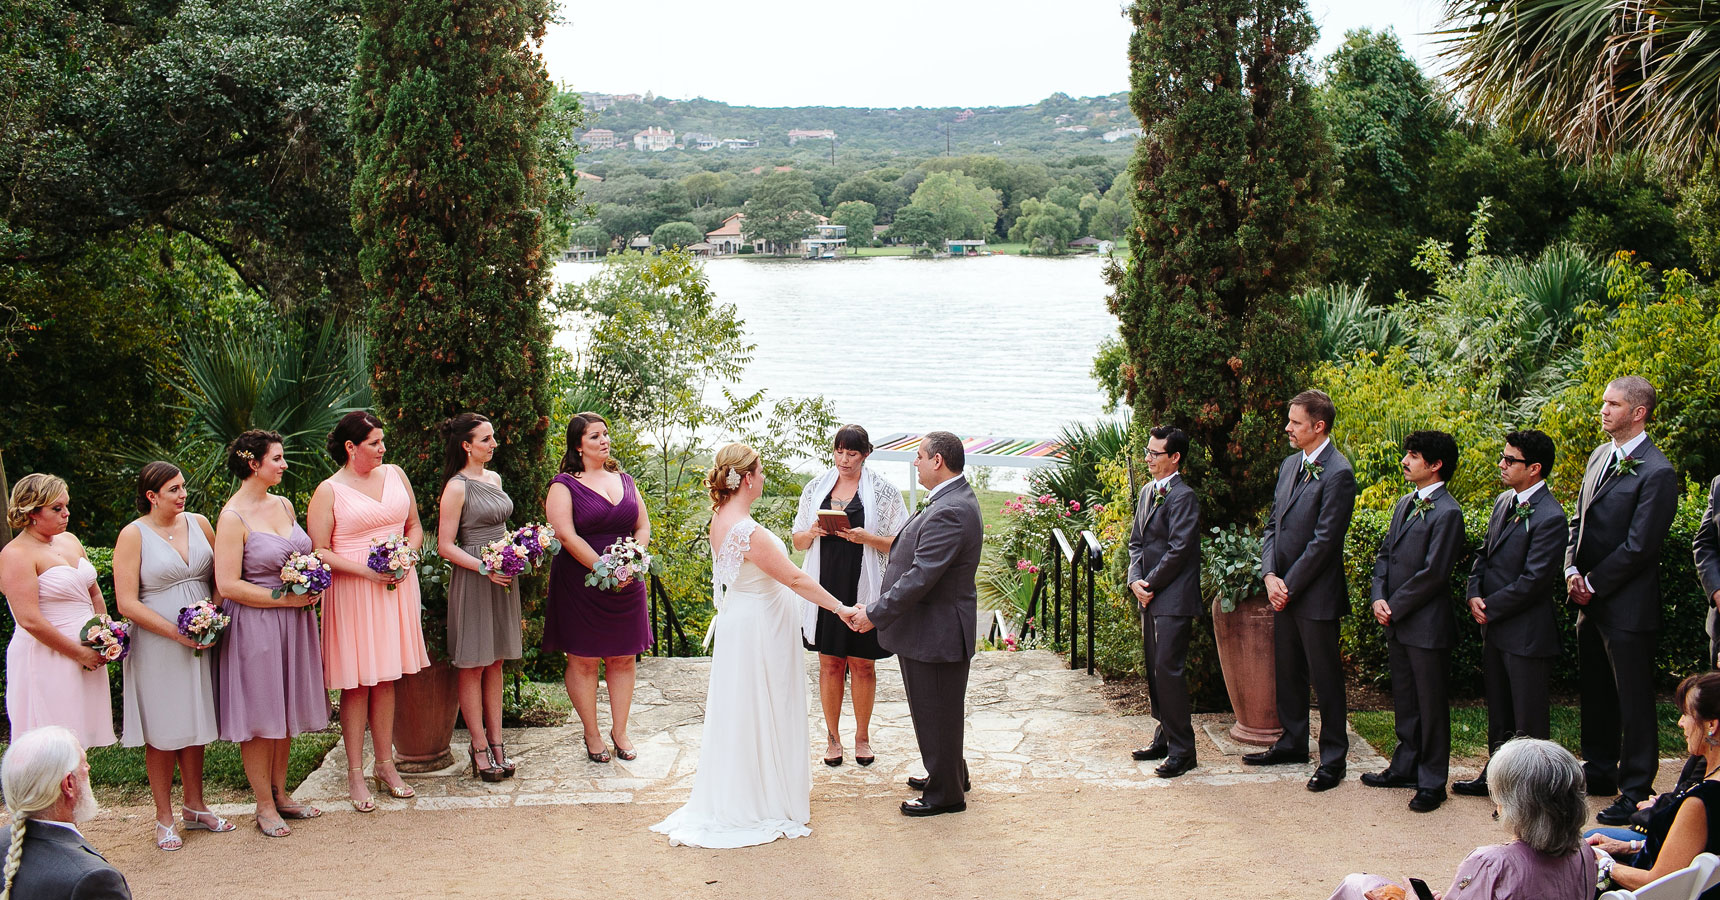 Outdoor wedding ceremony at Laguna Gloria